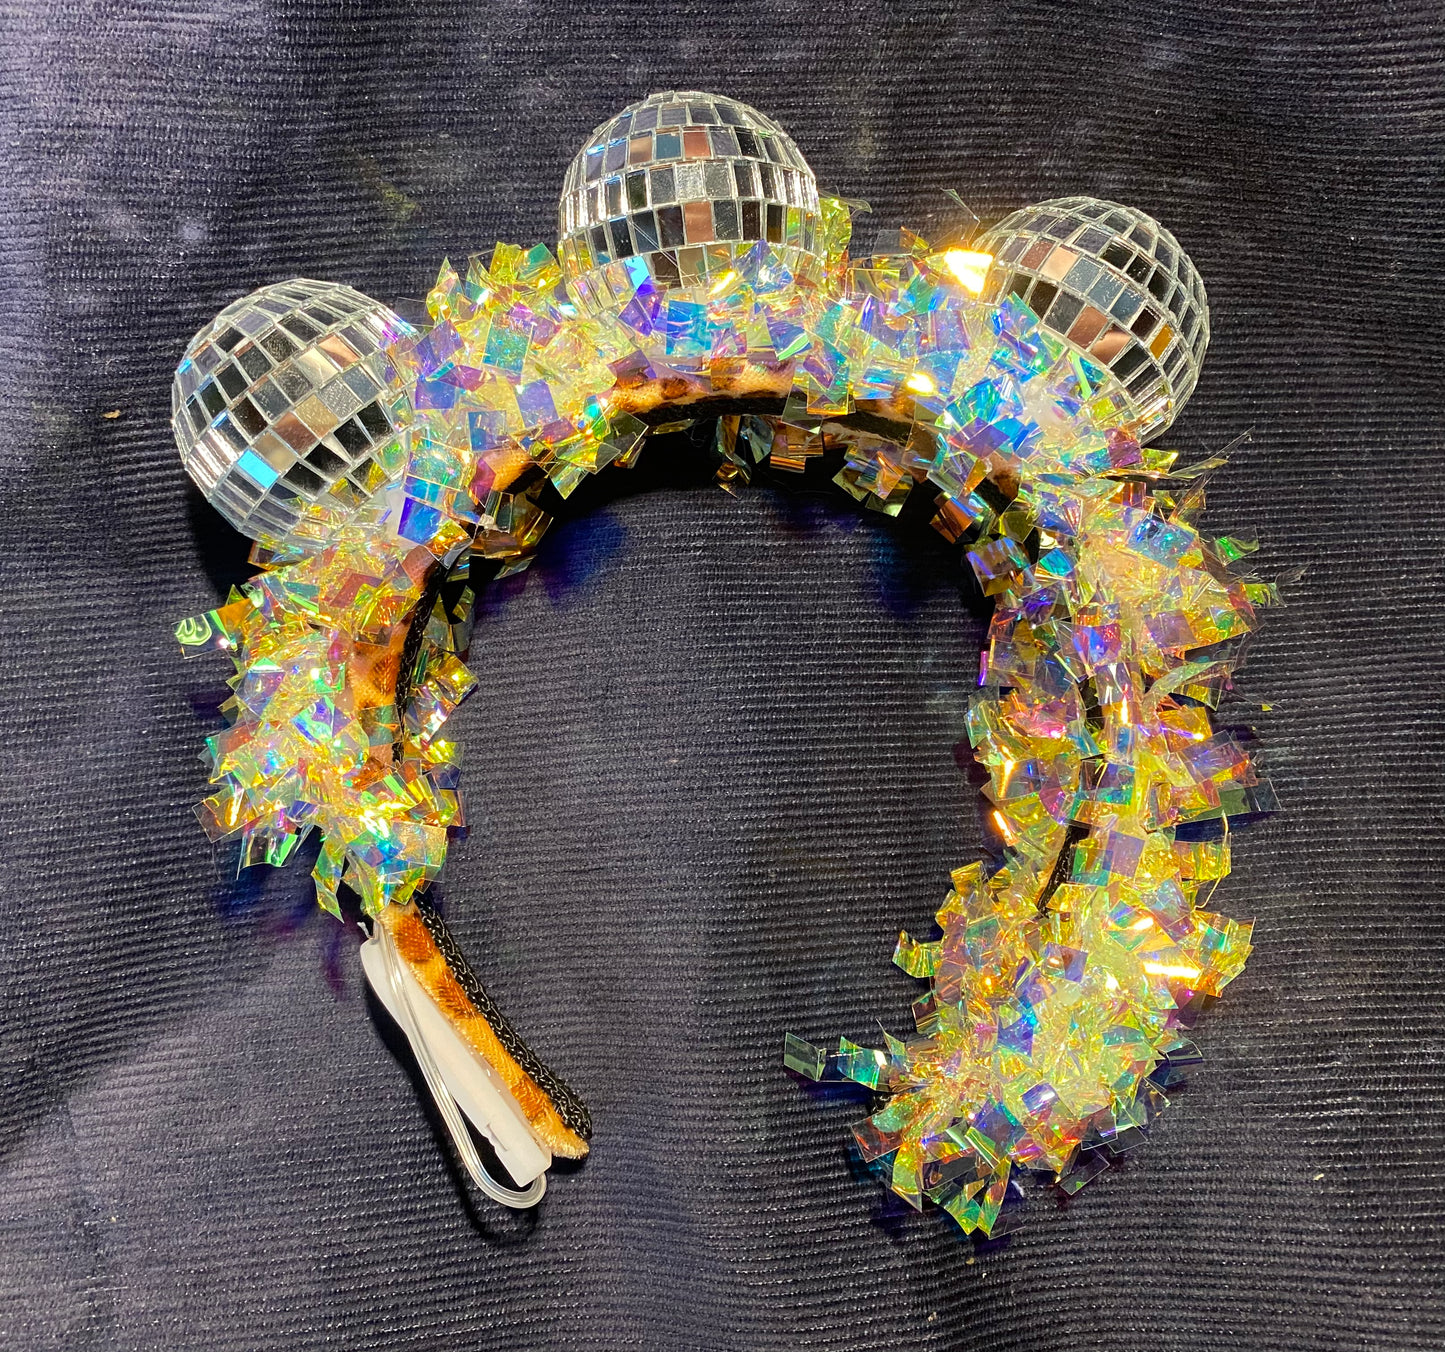 Light up disco time headband, disco balls and iridescent